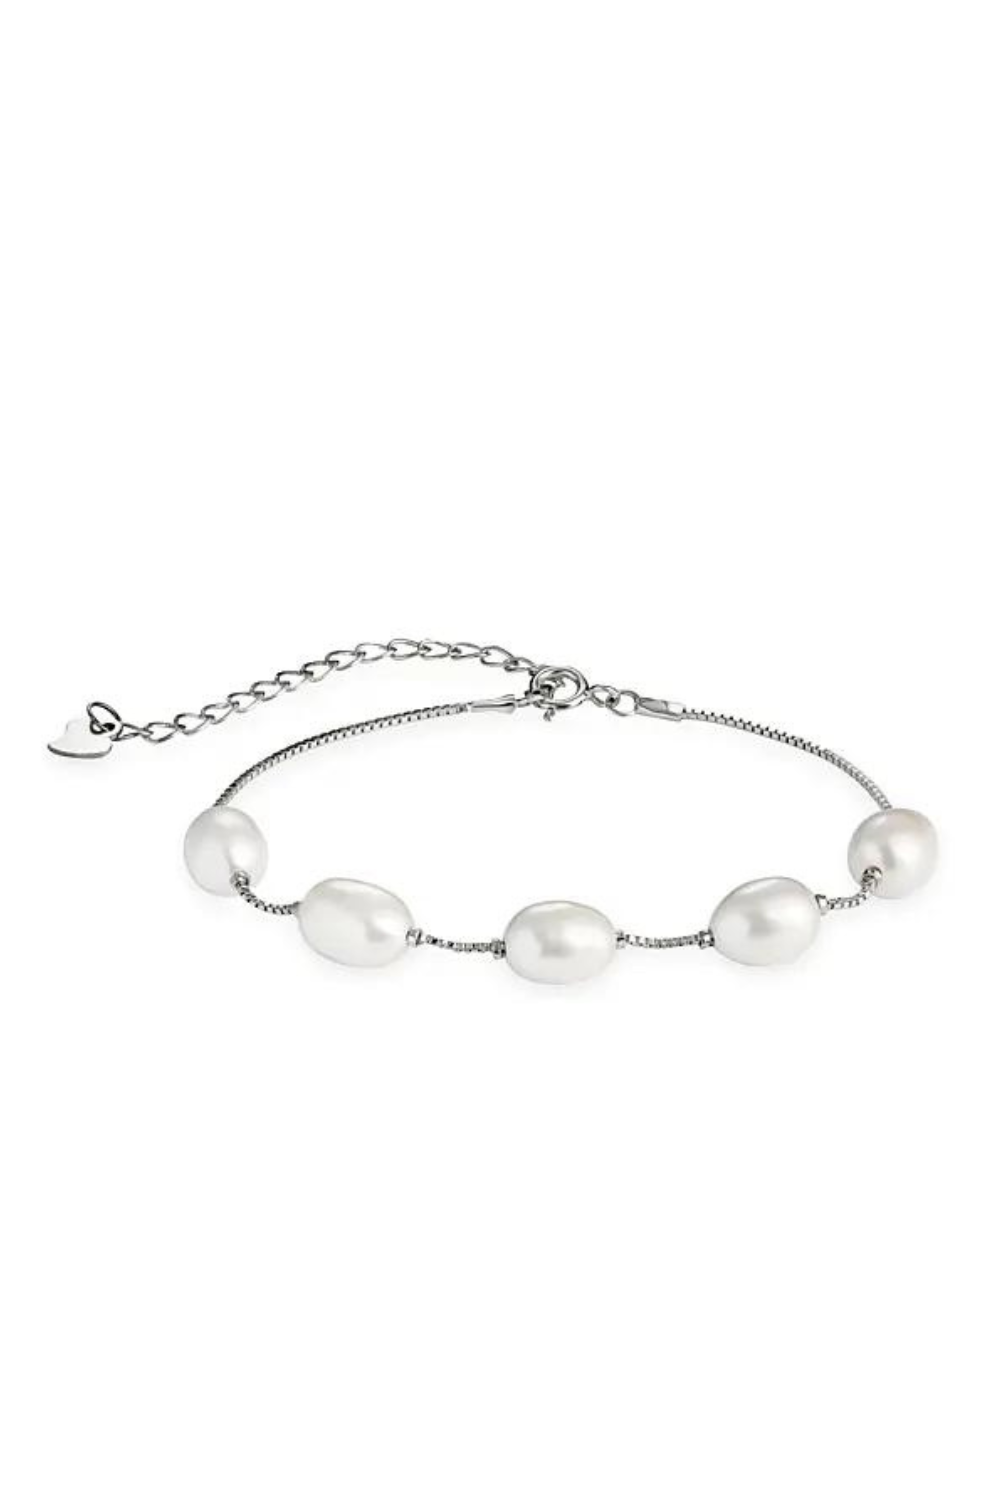 Náramek s perlou Něžnost, Stříbrný, (SILVERAMO), B2G452